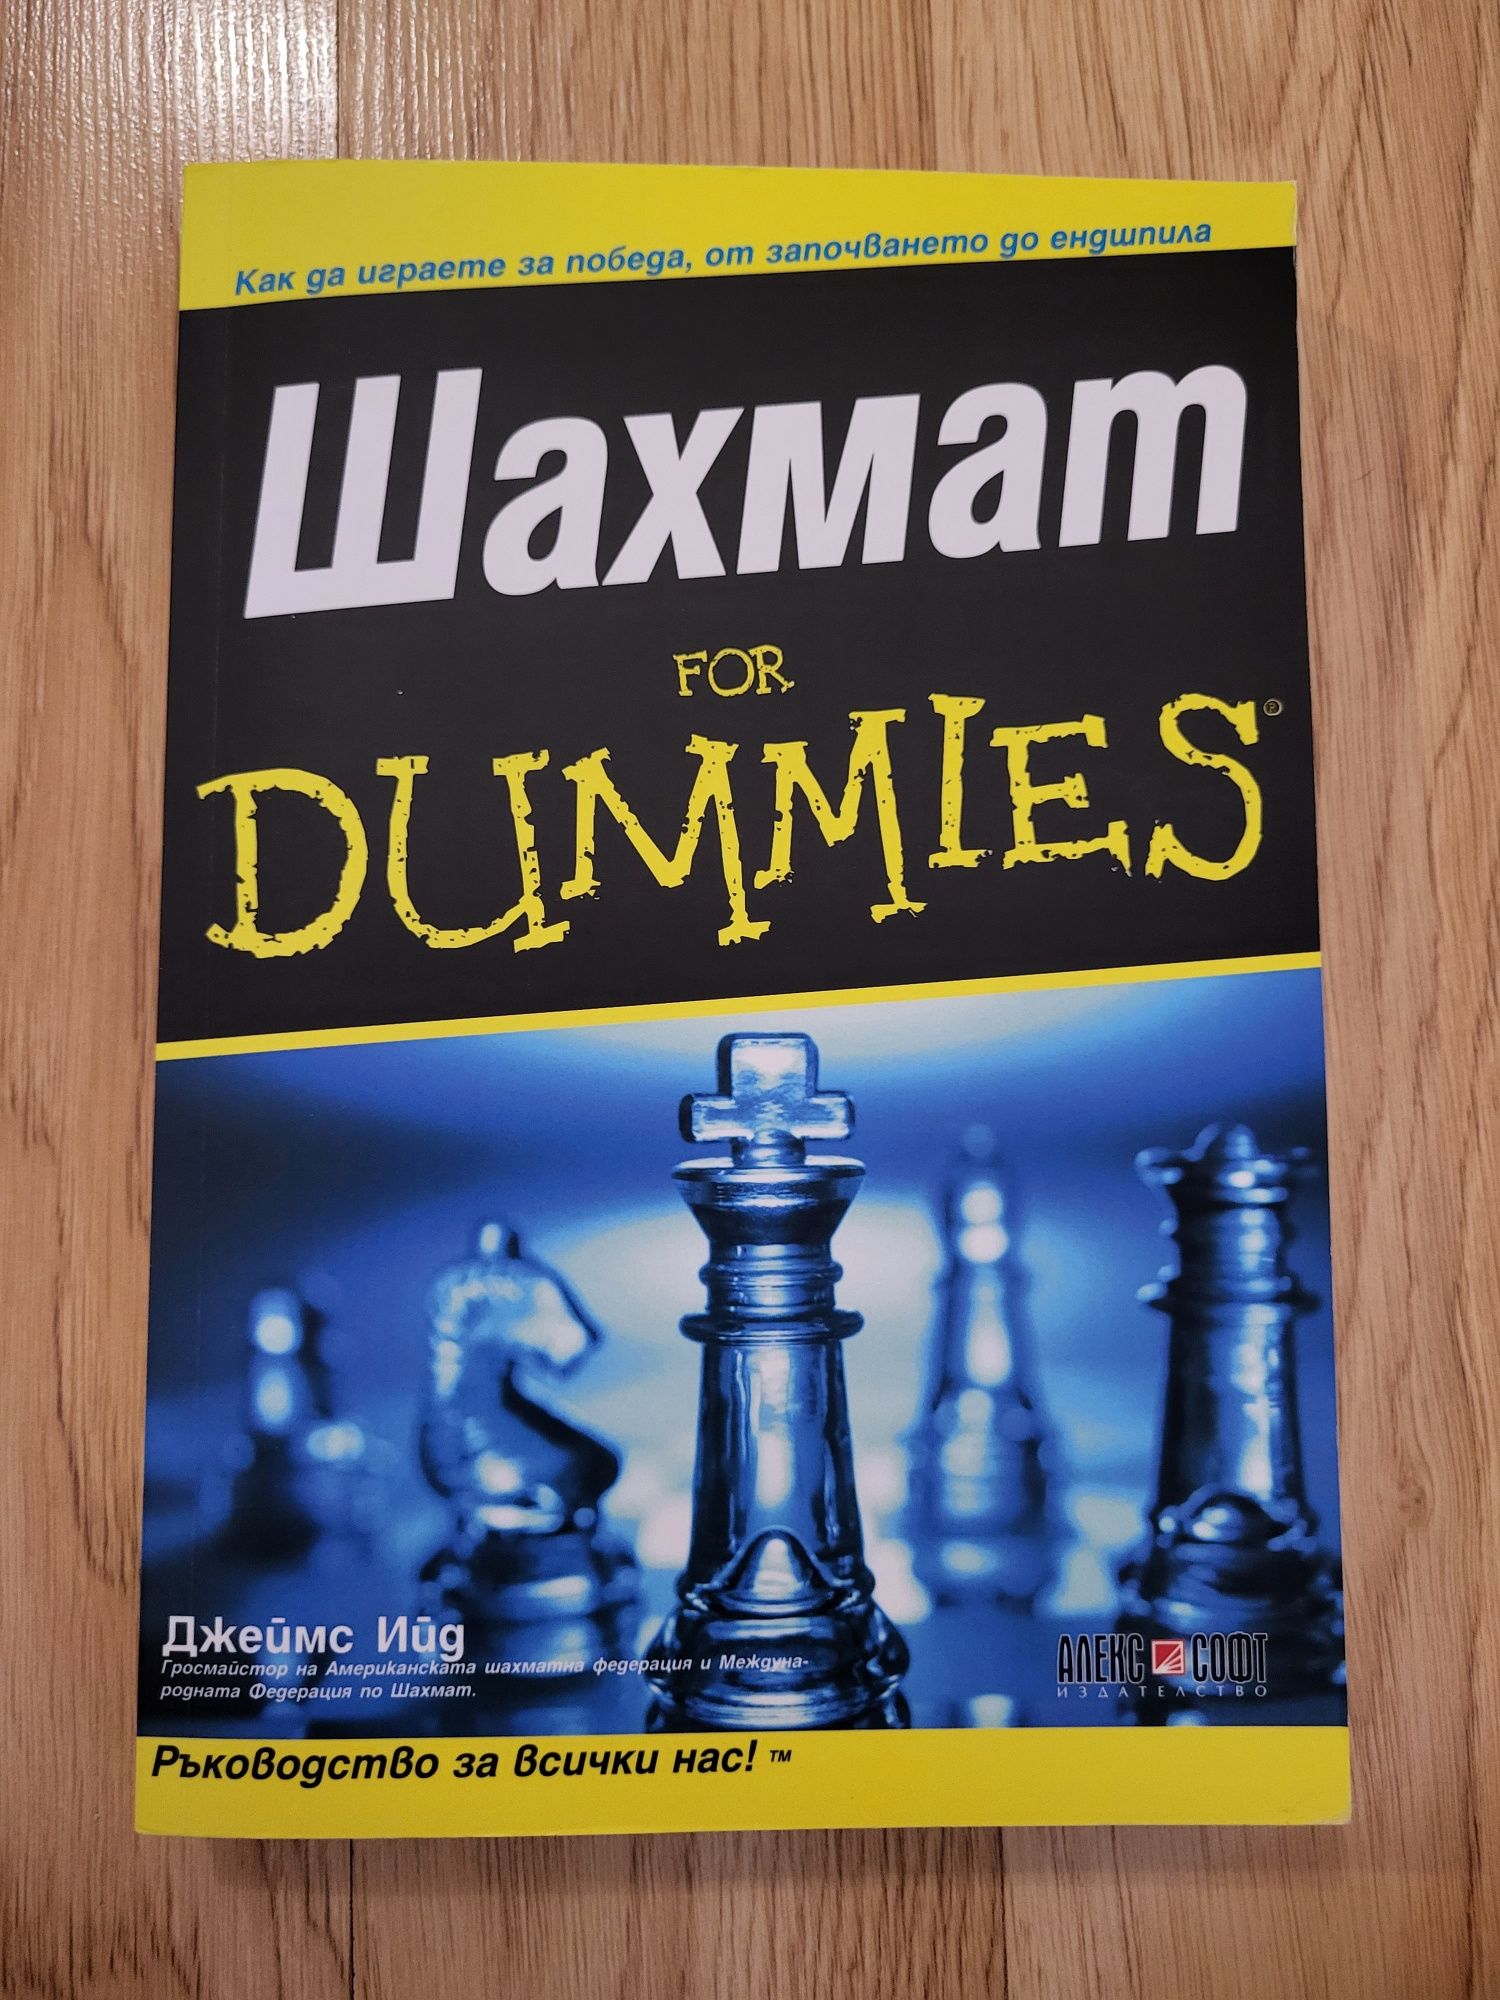 Шахмат for dummies